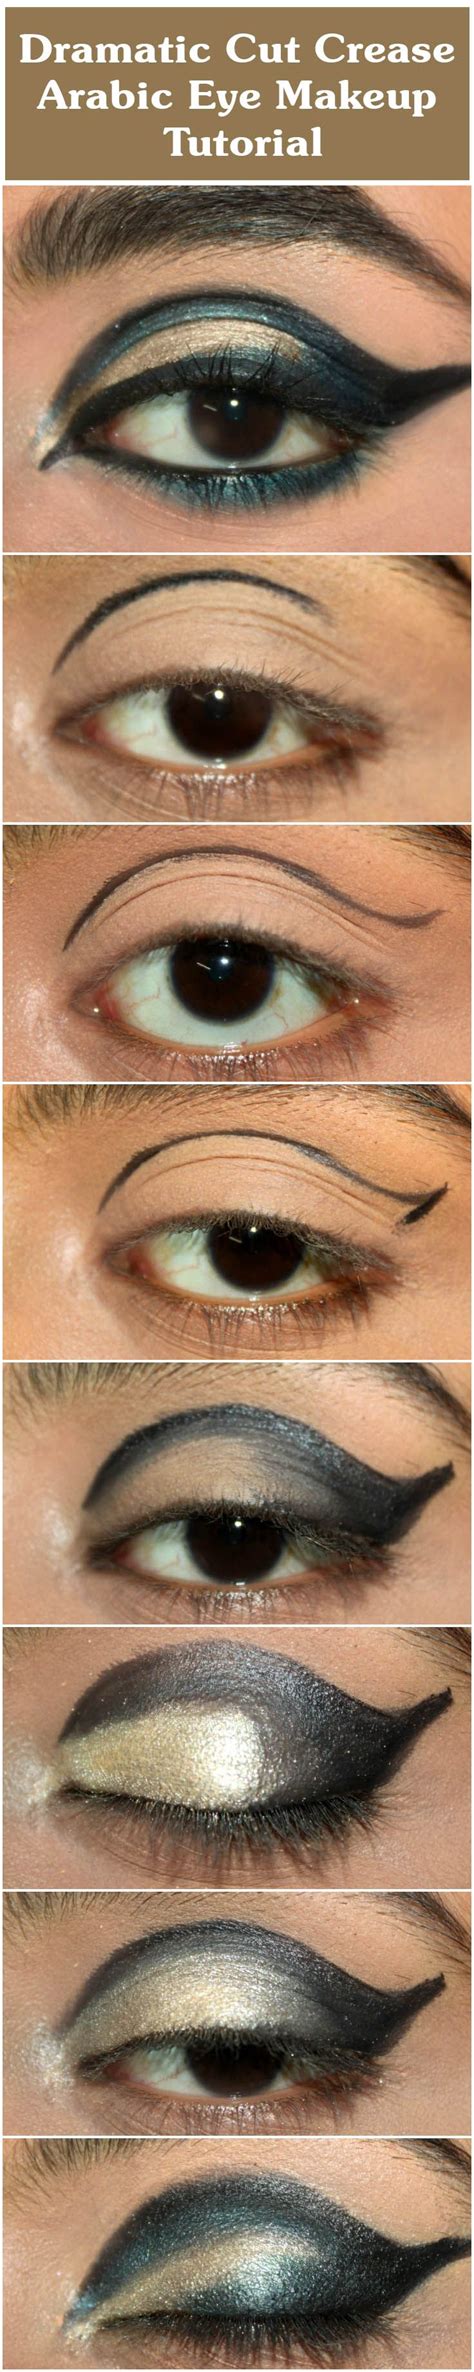 31 Best Arabic Eye Makeup Images On Pinterest Makeup